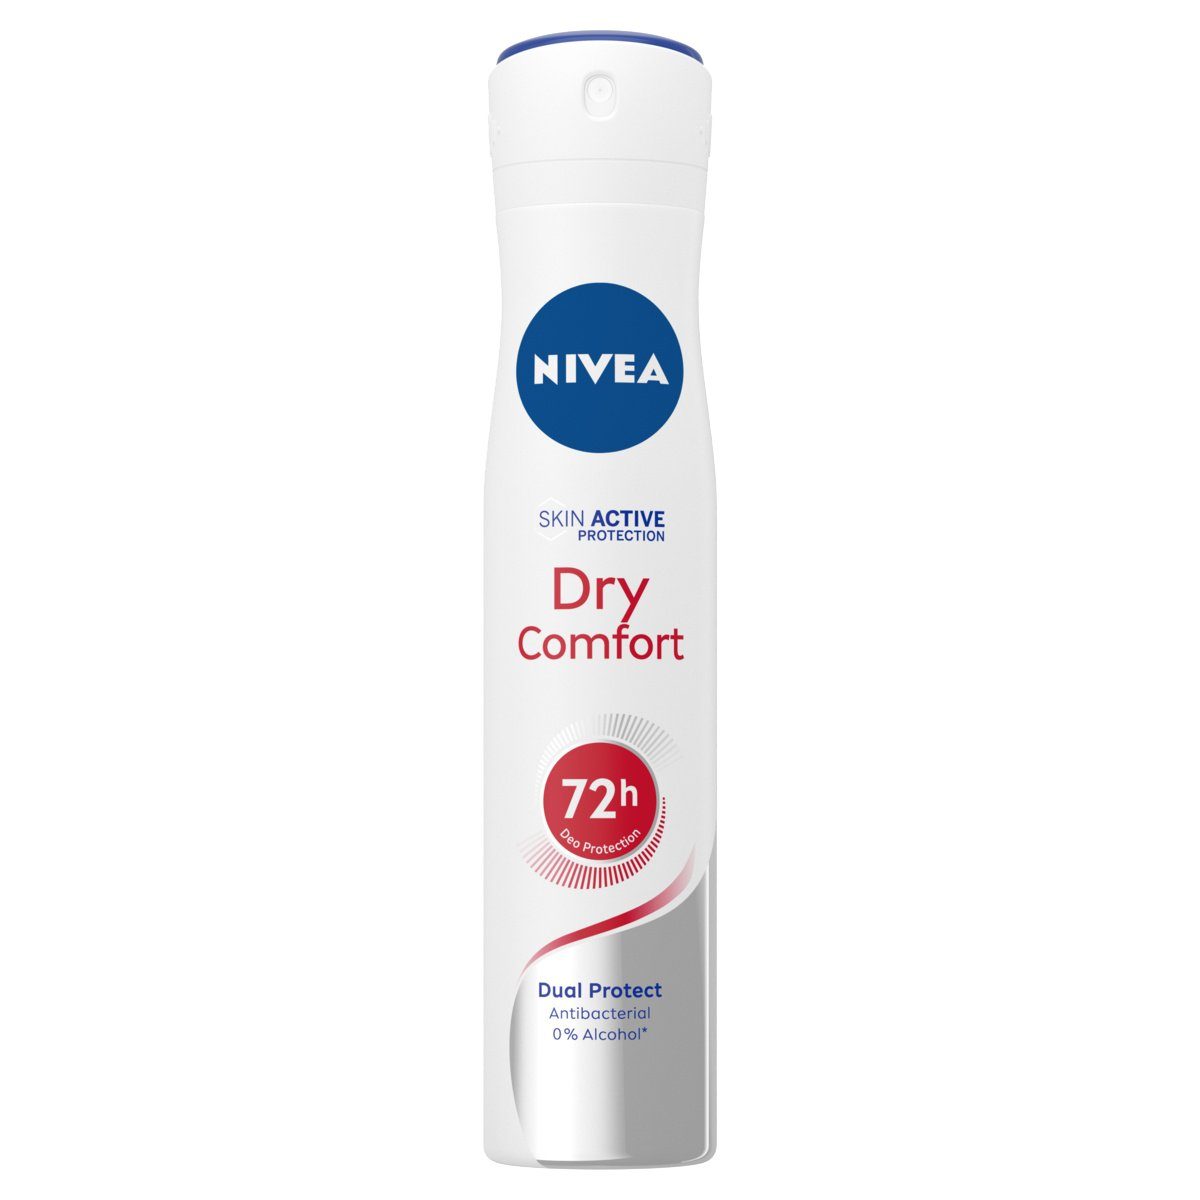 Aangenaam kennis te maken Elementair Brood Nivea Dry comfort deodorant Flacon 20 cl | dekweker.nl